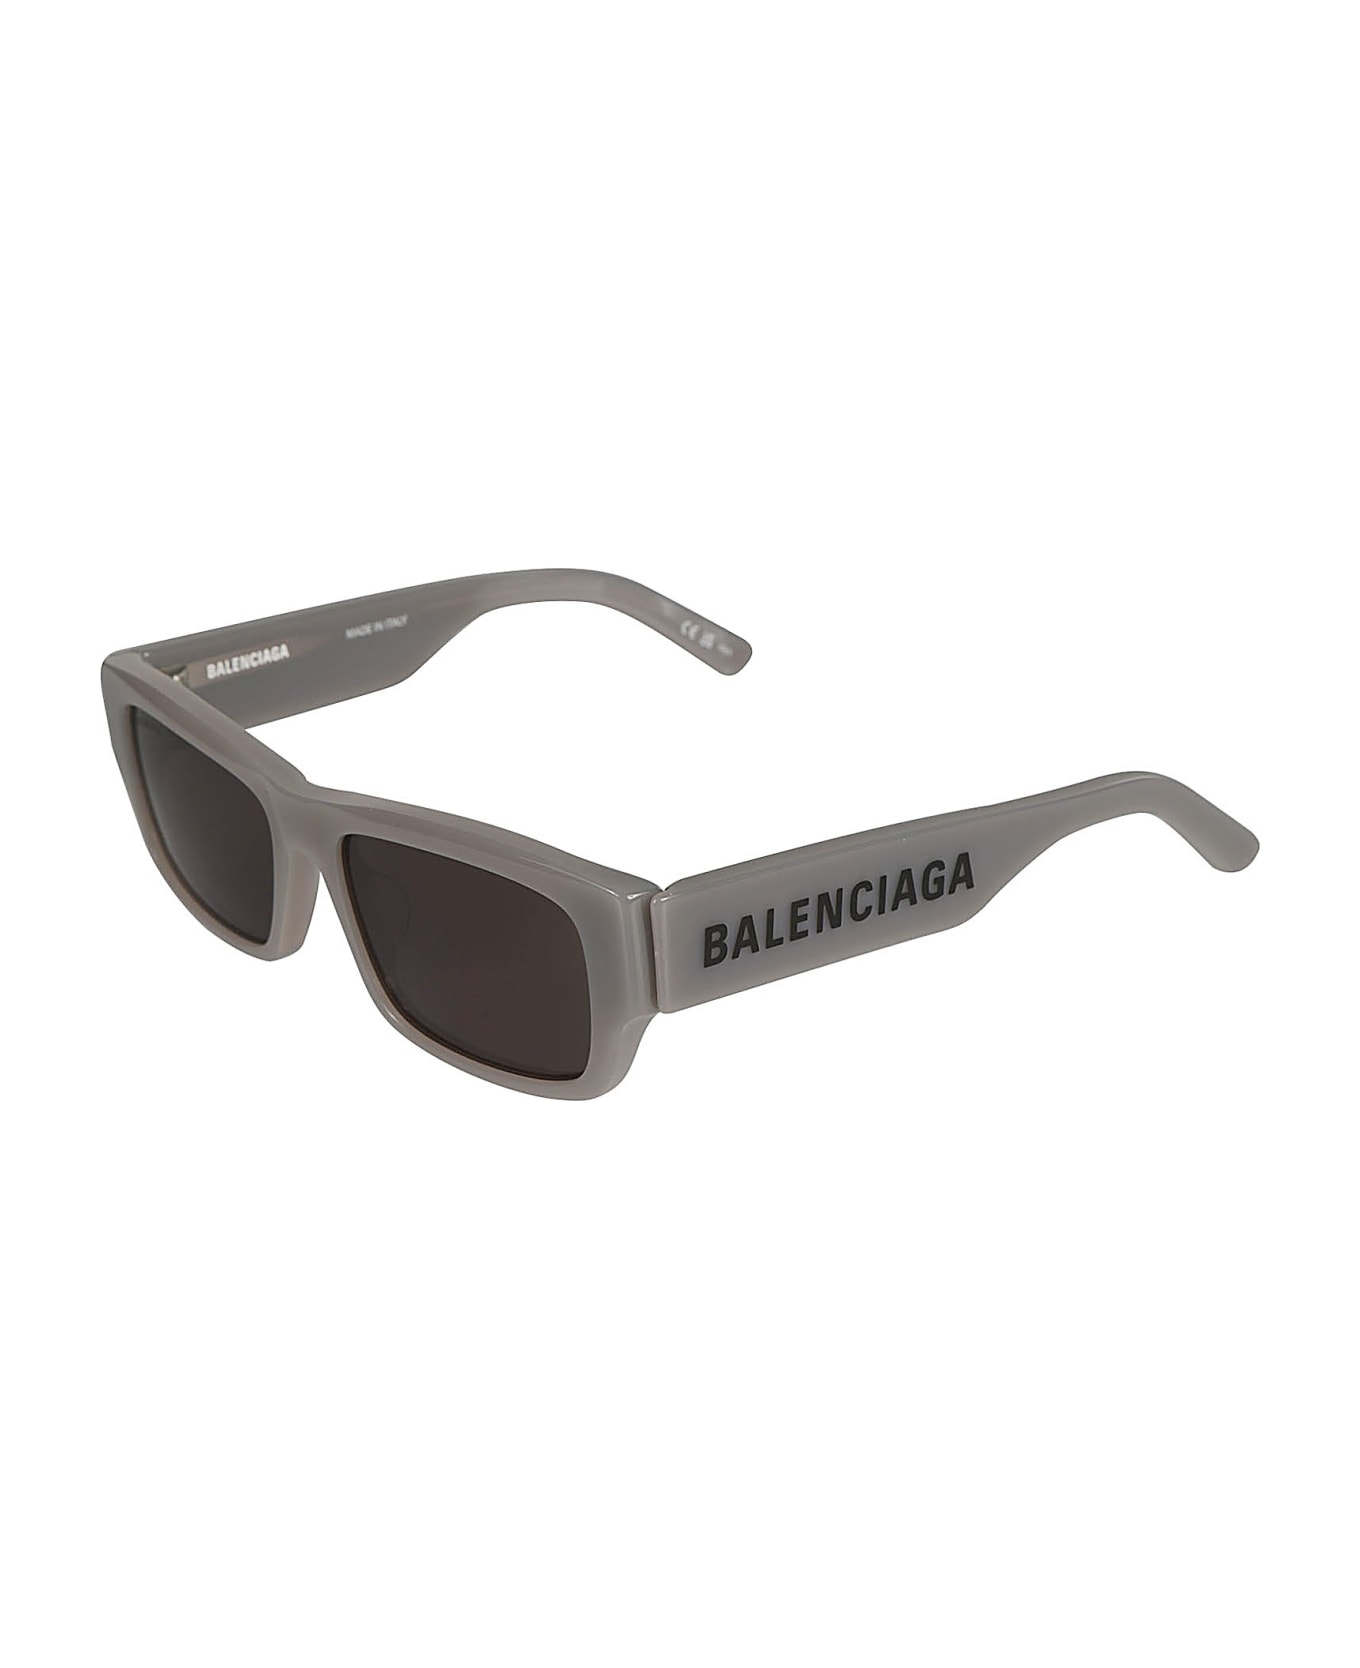 Balenciaga Eyewear Logo Sided Rectangular Lens Sunglasses - 004 GREY GREY GREY